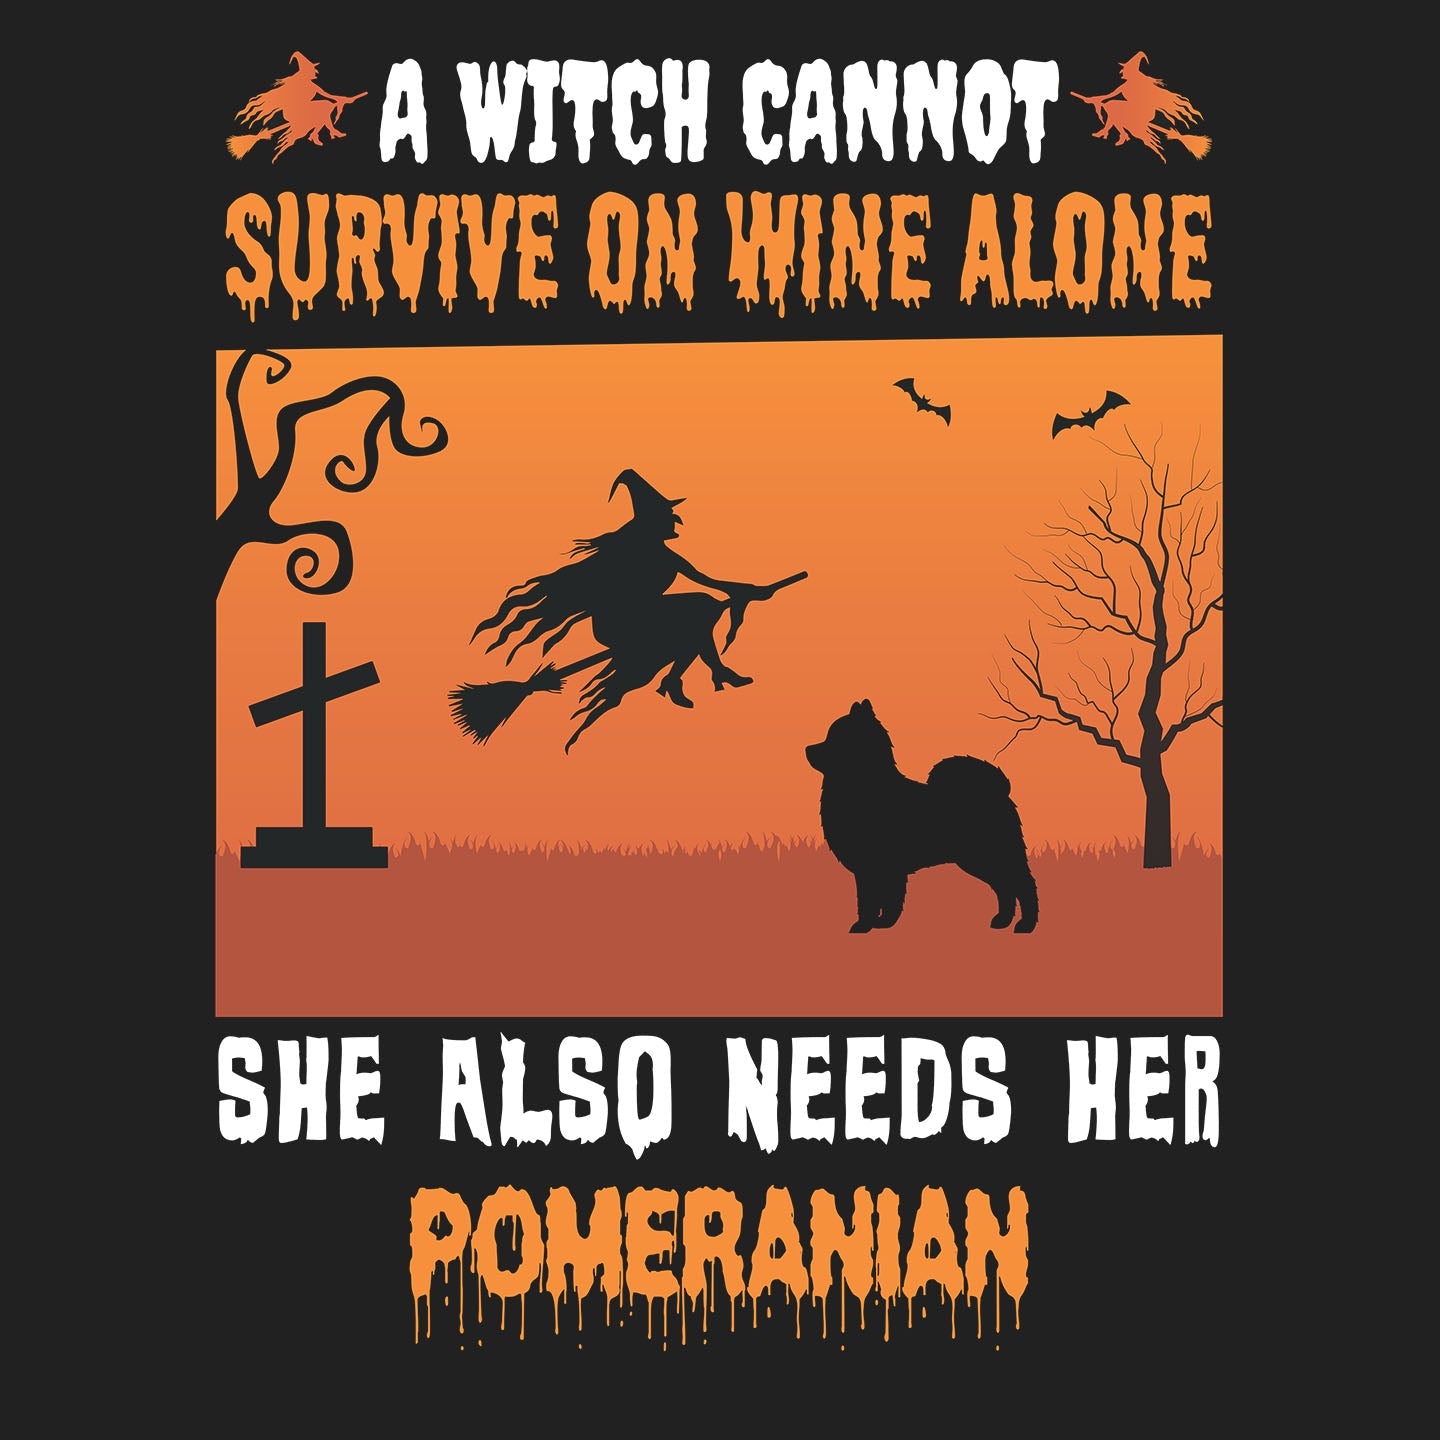 A Witch Needs Her Pomeranian - Women's V-Neck T-Shirt